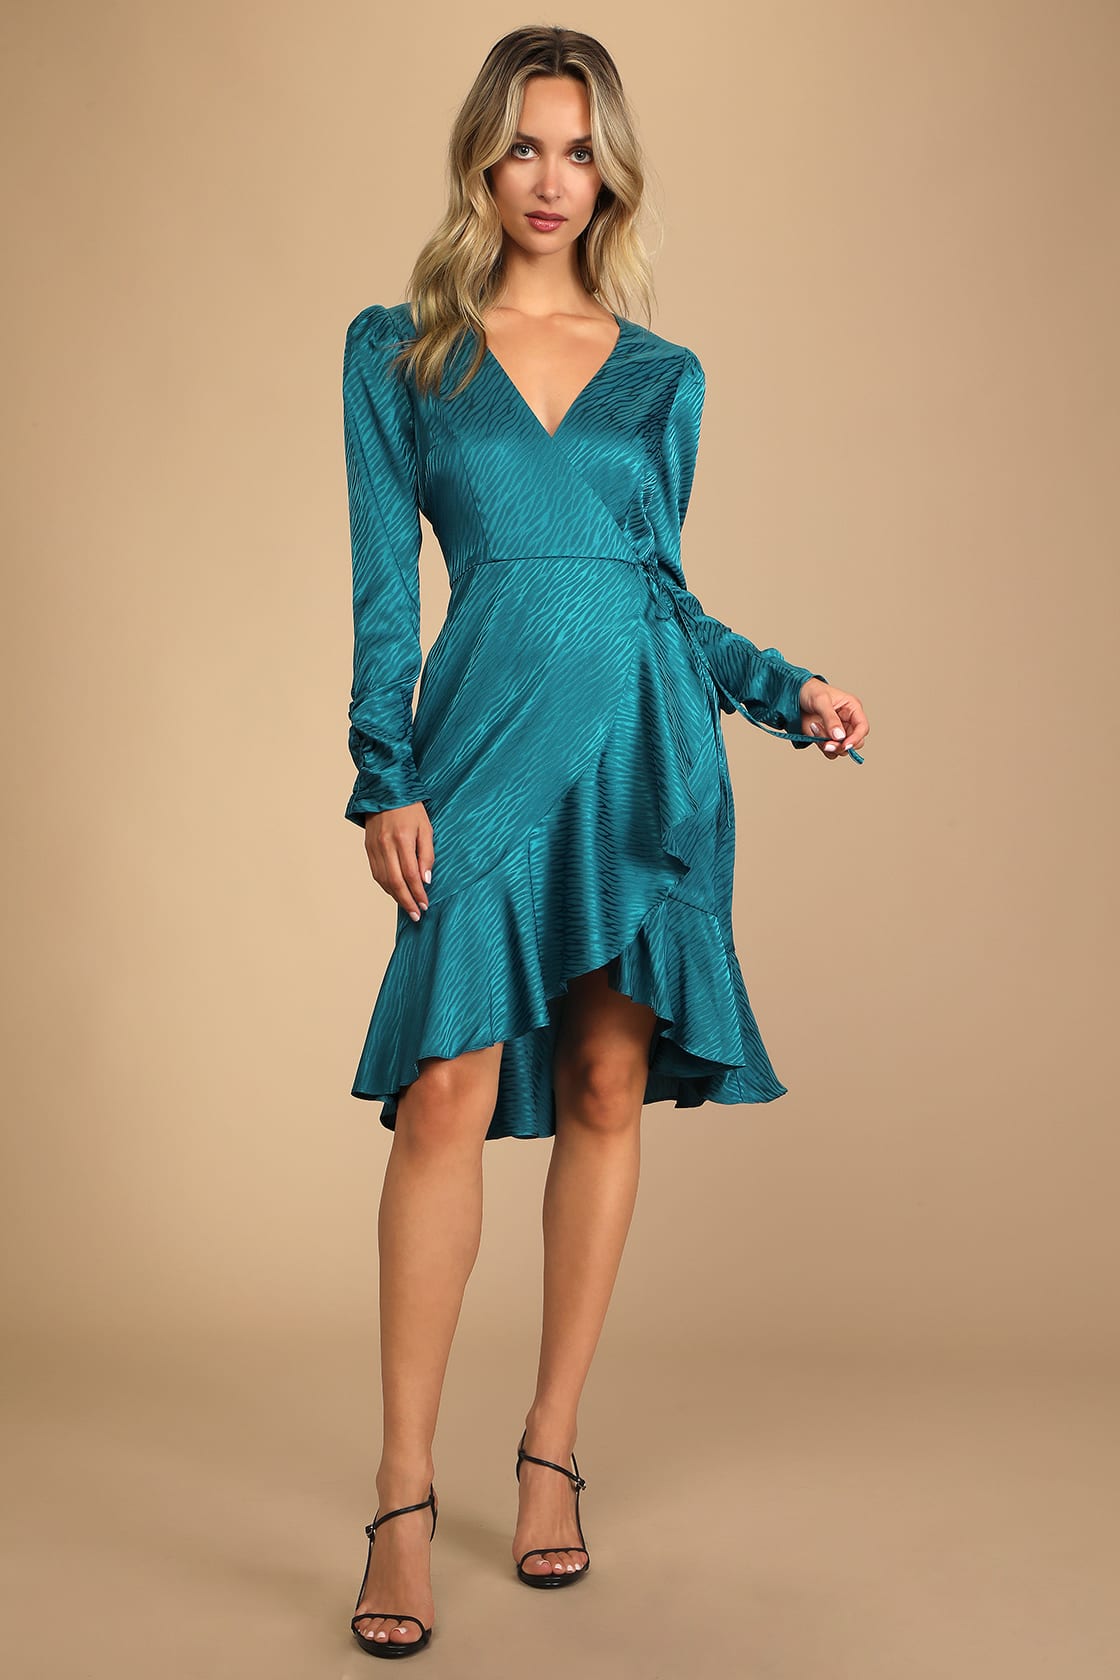 Flair for Drama Teal Blue Satin Jacquard Faux Wrap Midi Dress